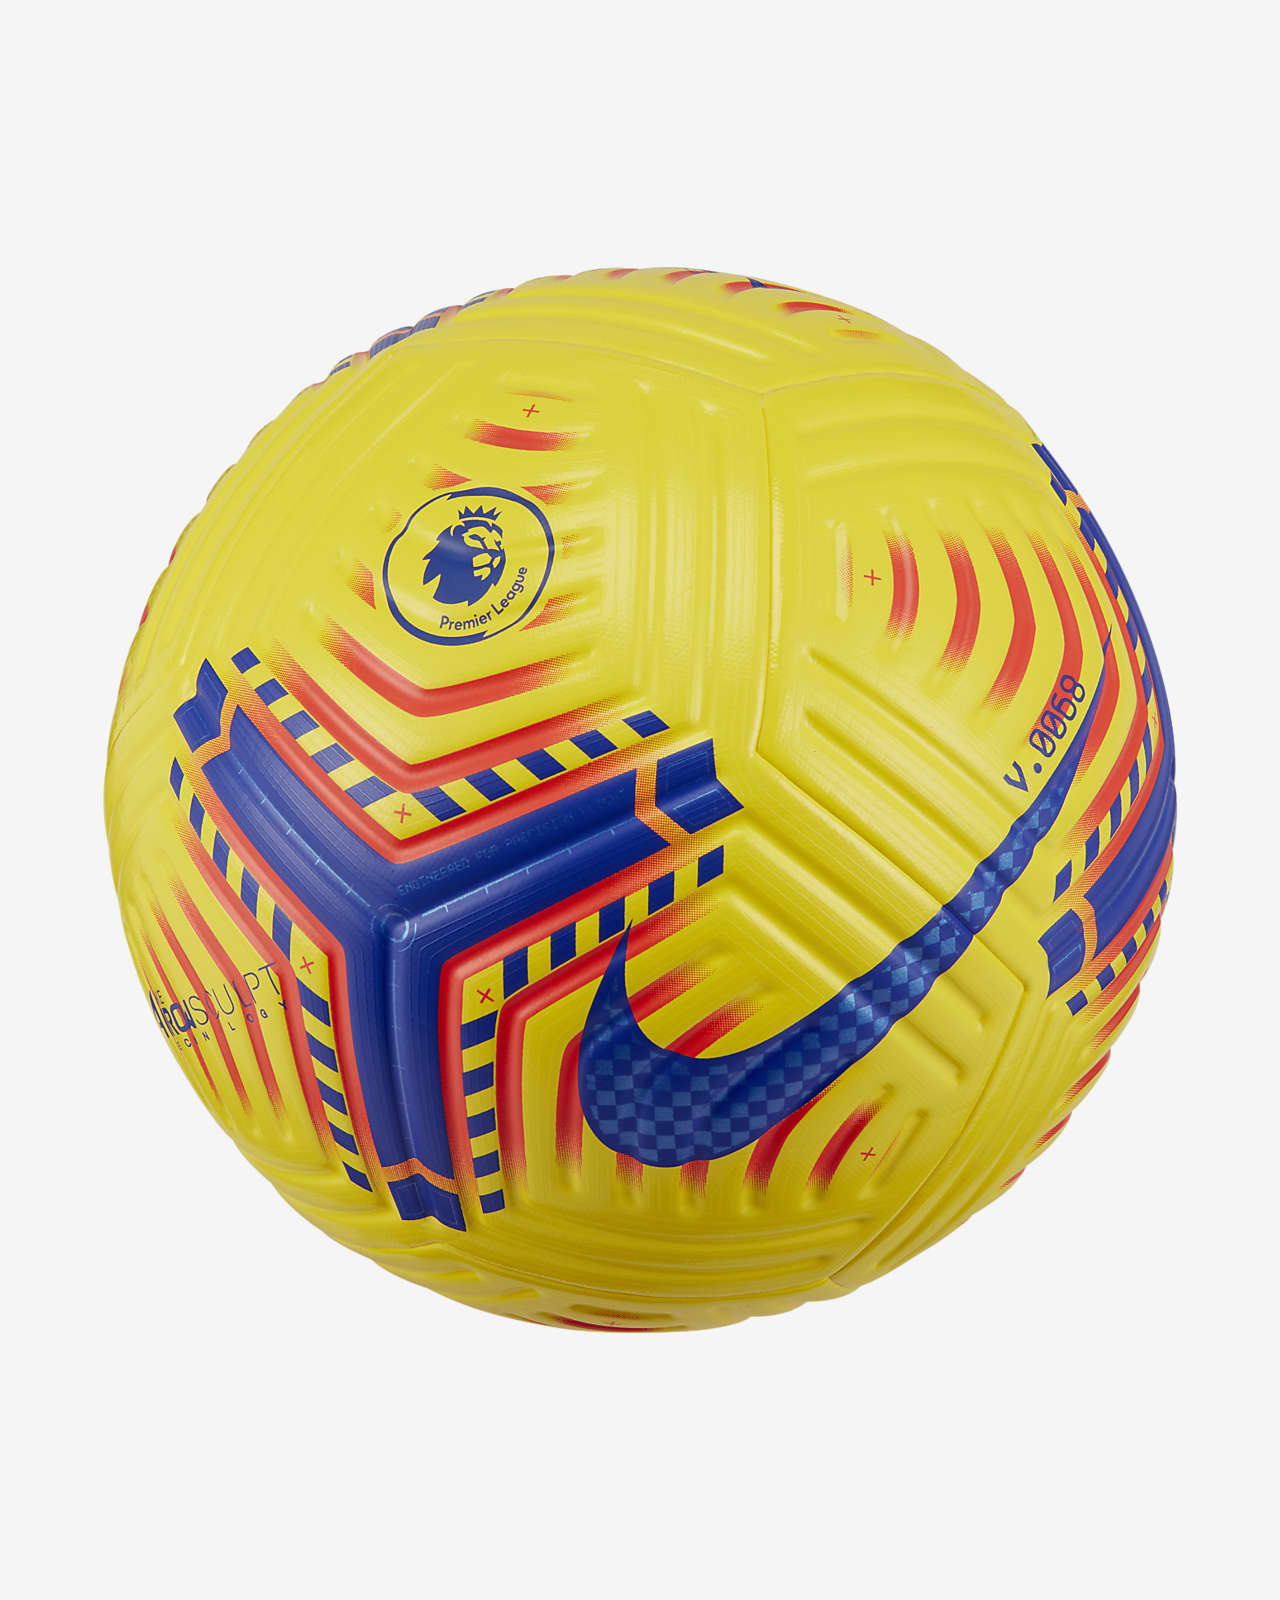 new nike football ball